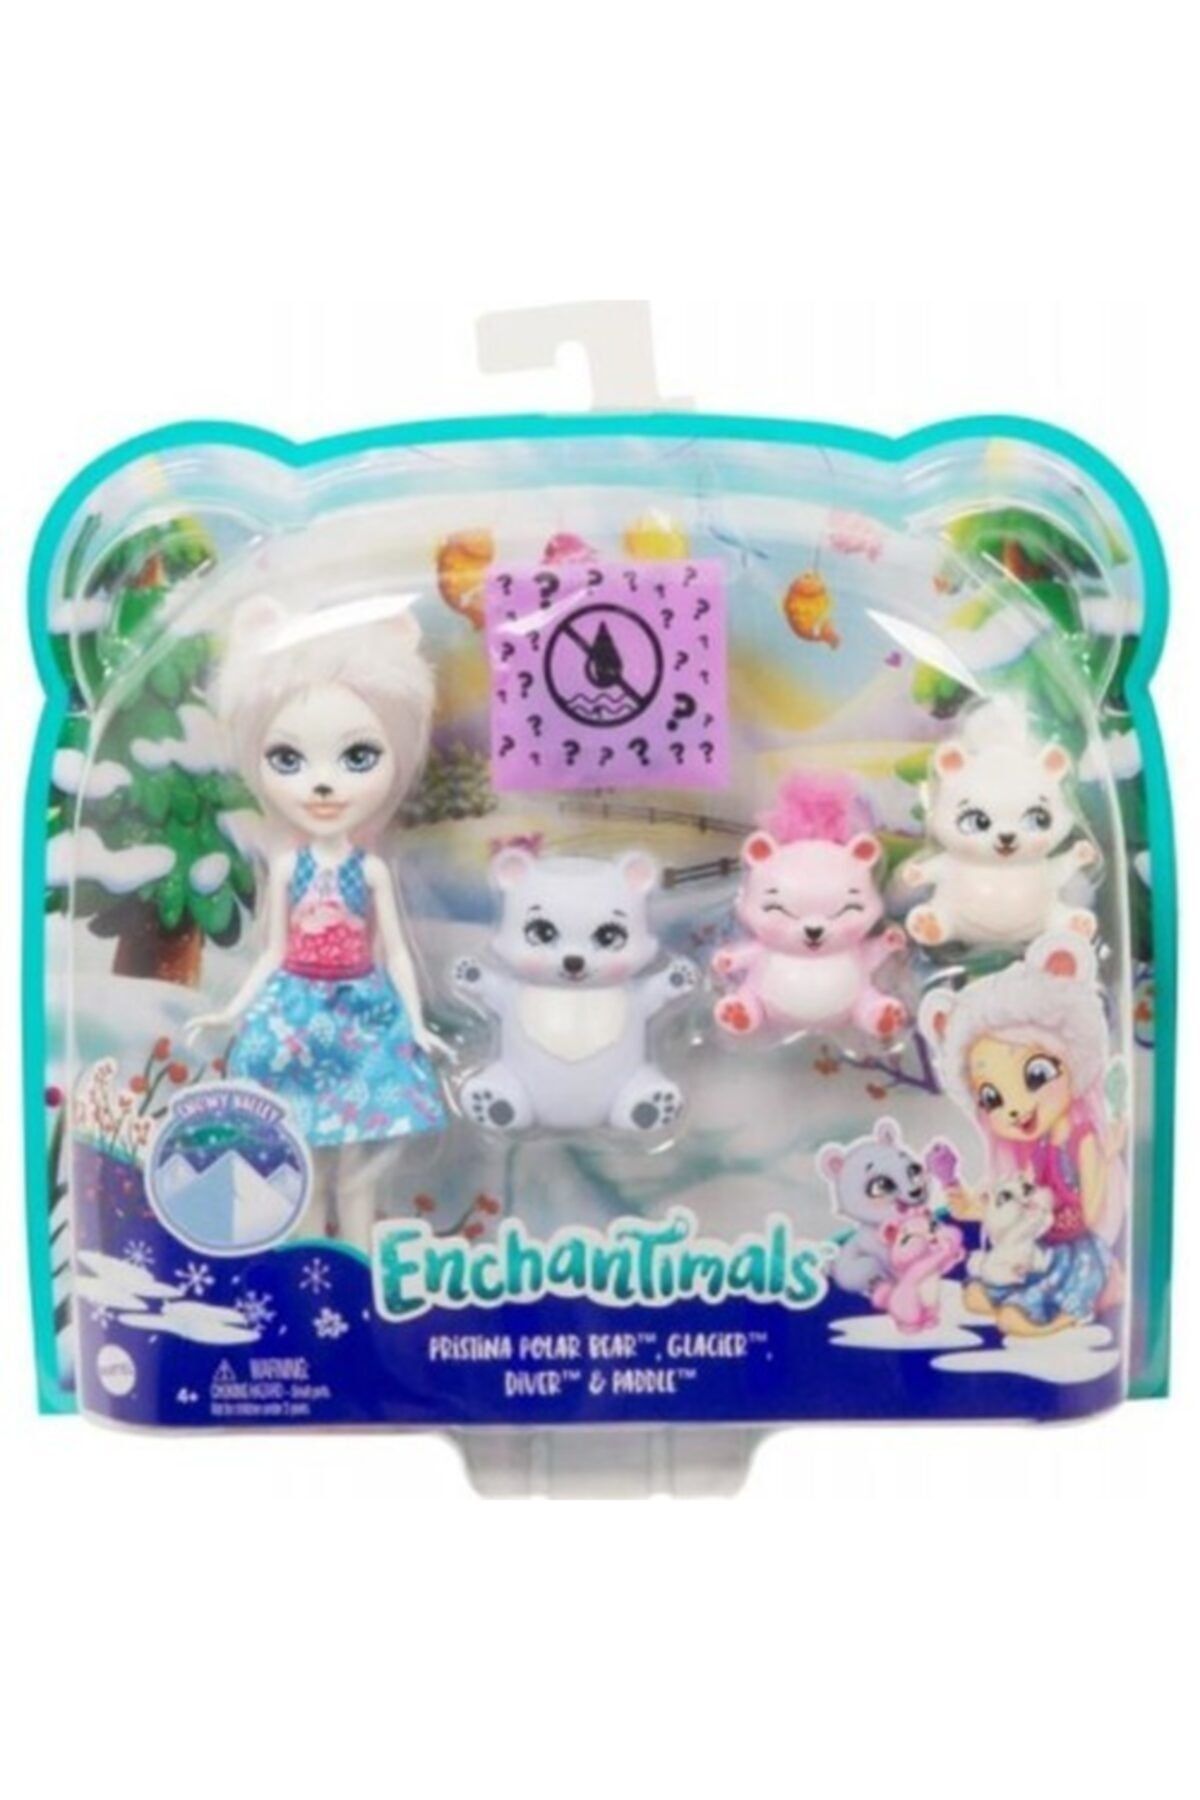 Enchantimals Aile Serisi Pristina Polar Bear Gjx47 Mattel